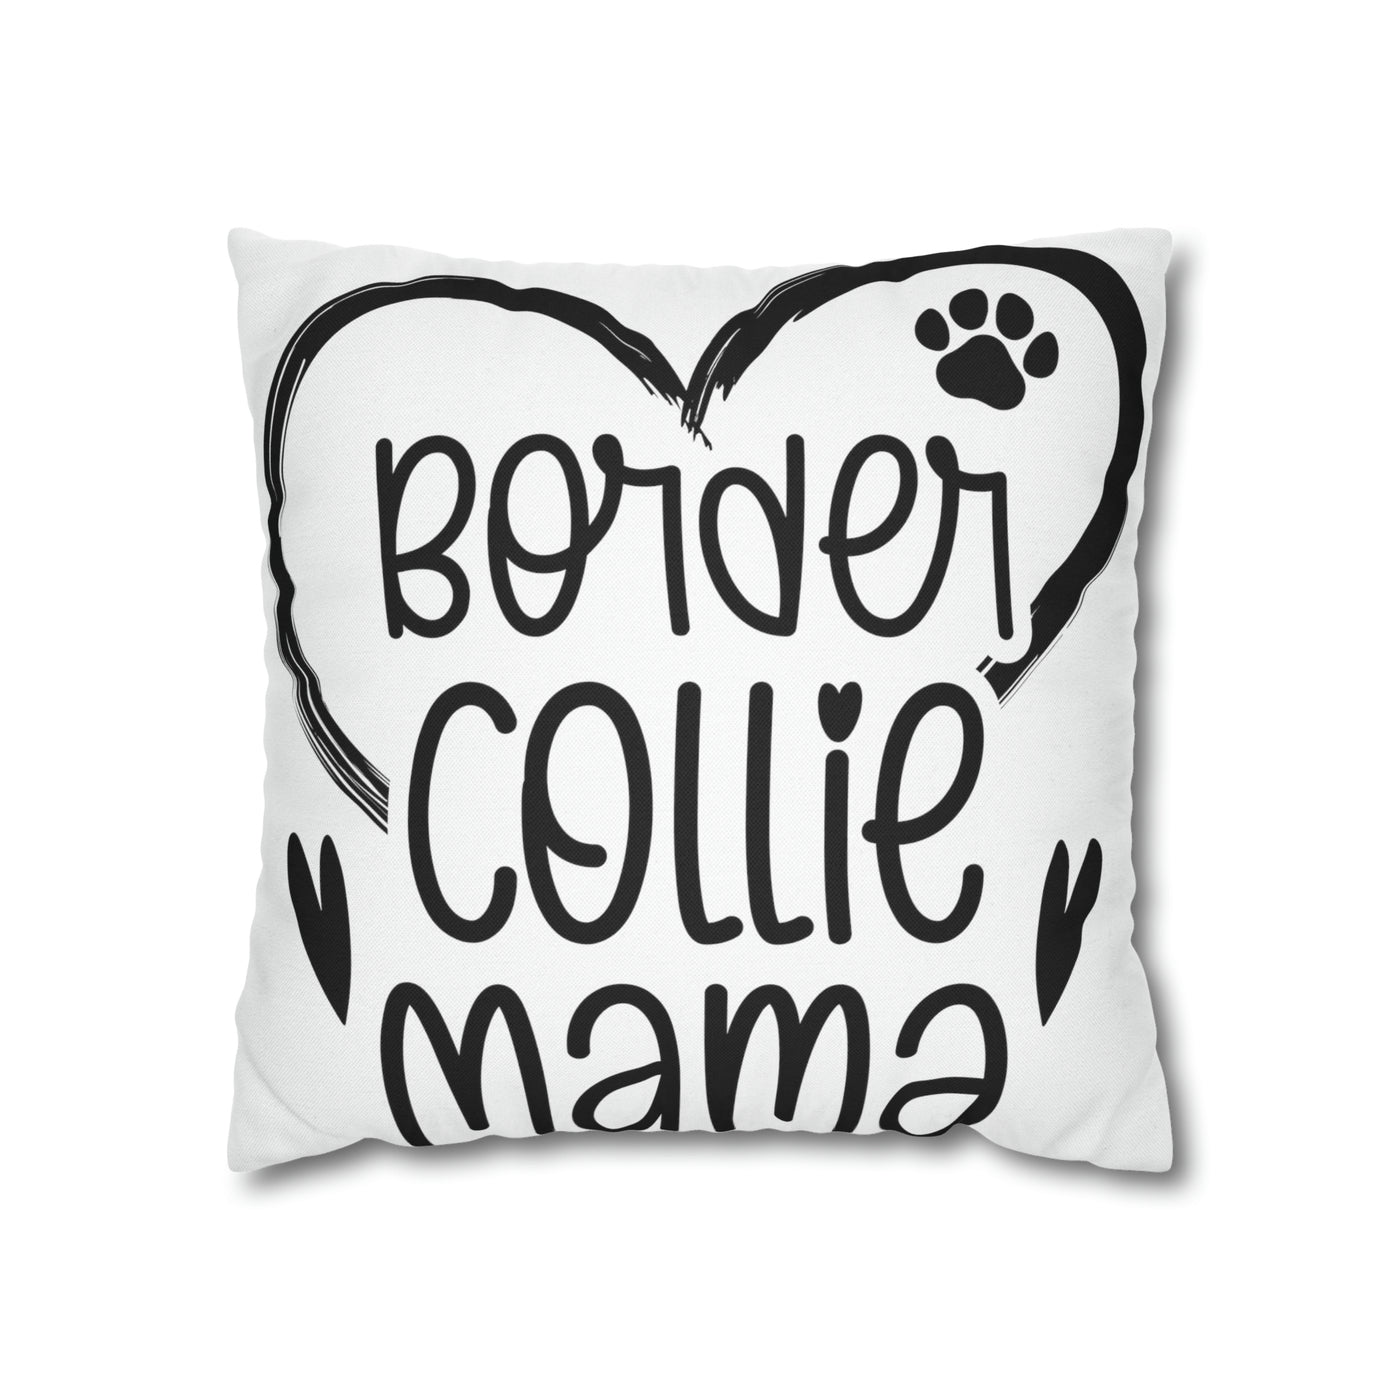 Border Collie Mama Square Pillow Case